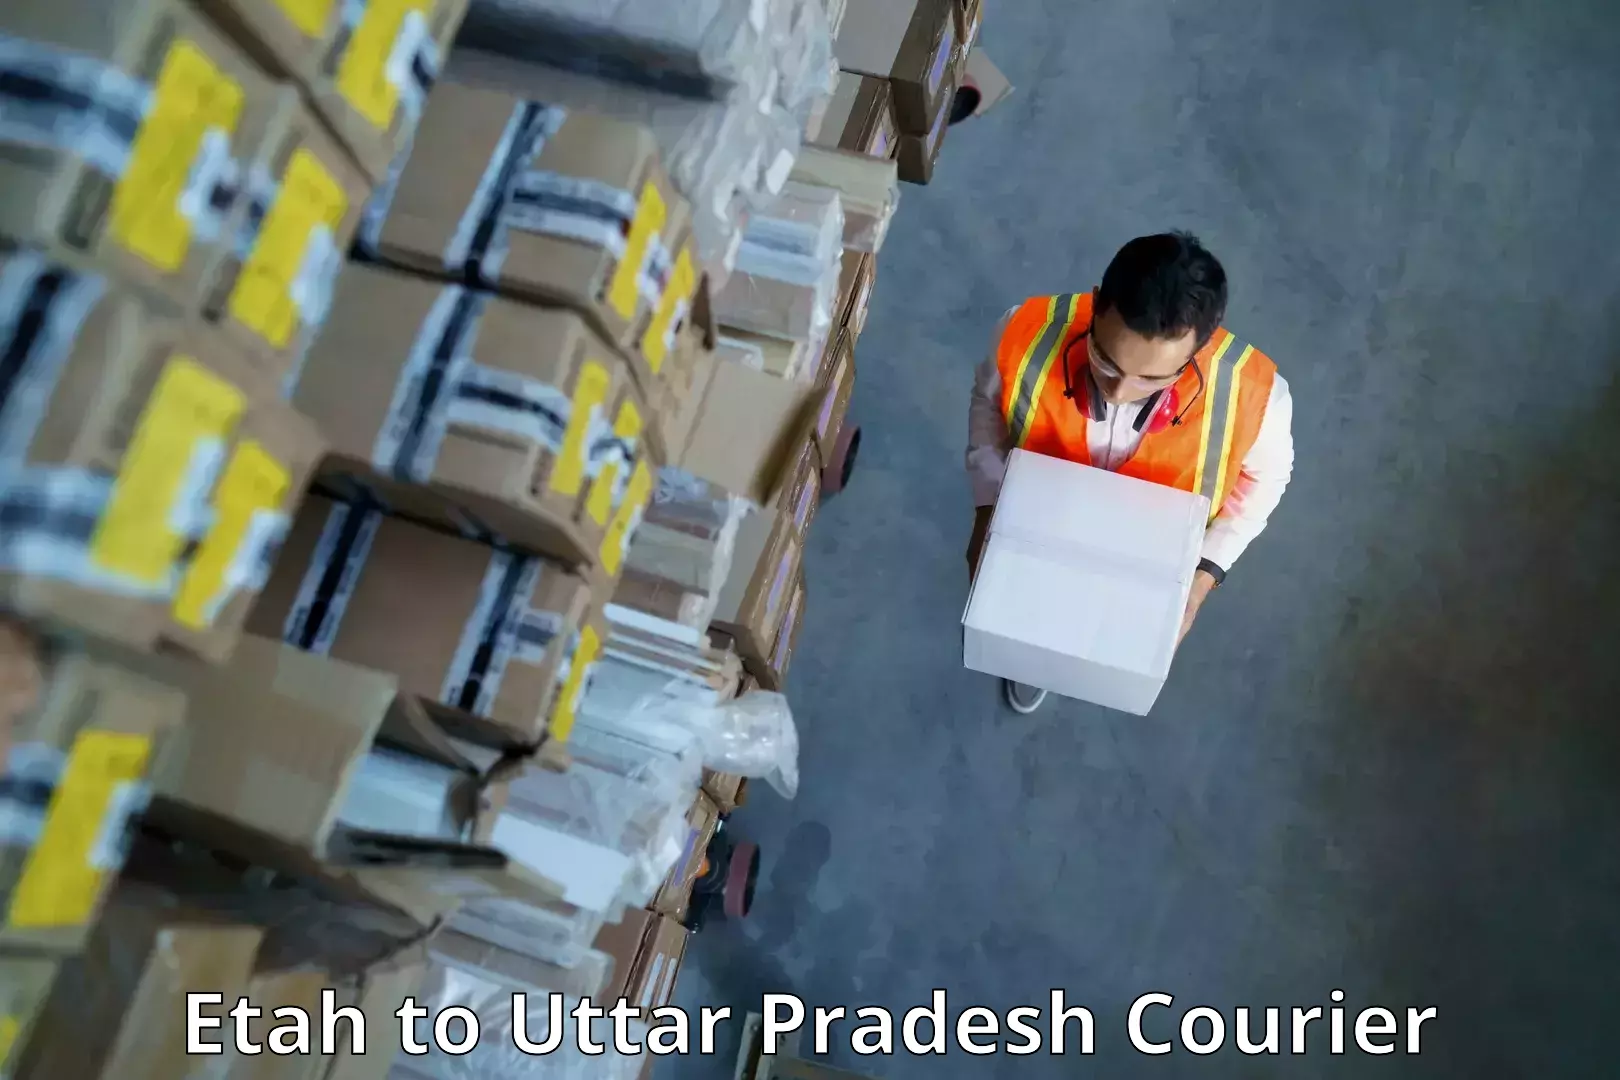 Automated parcel services Etah to Noida